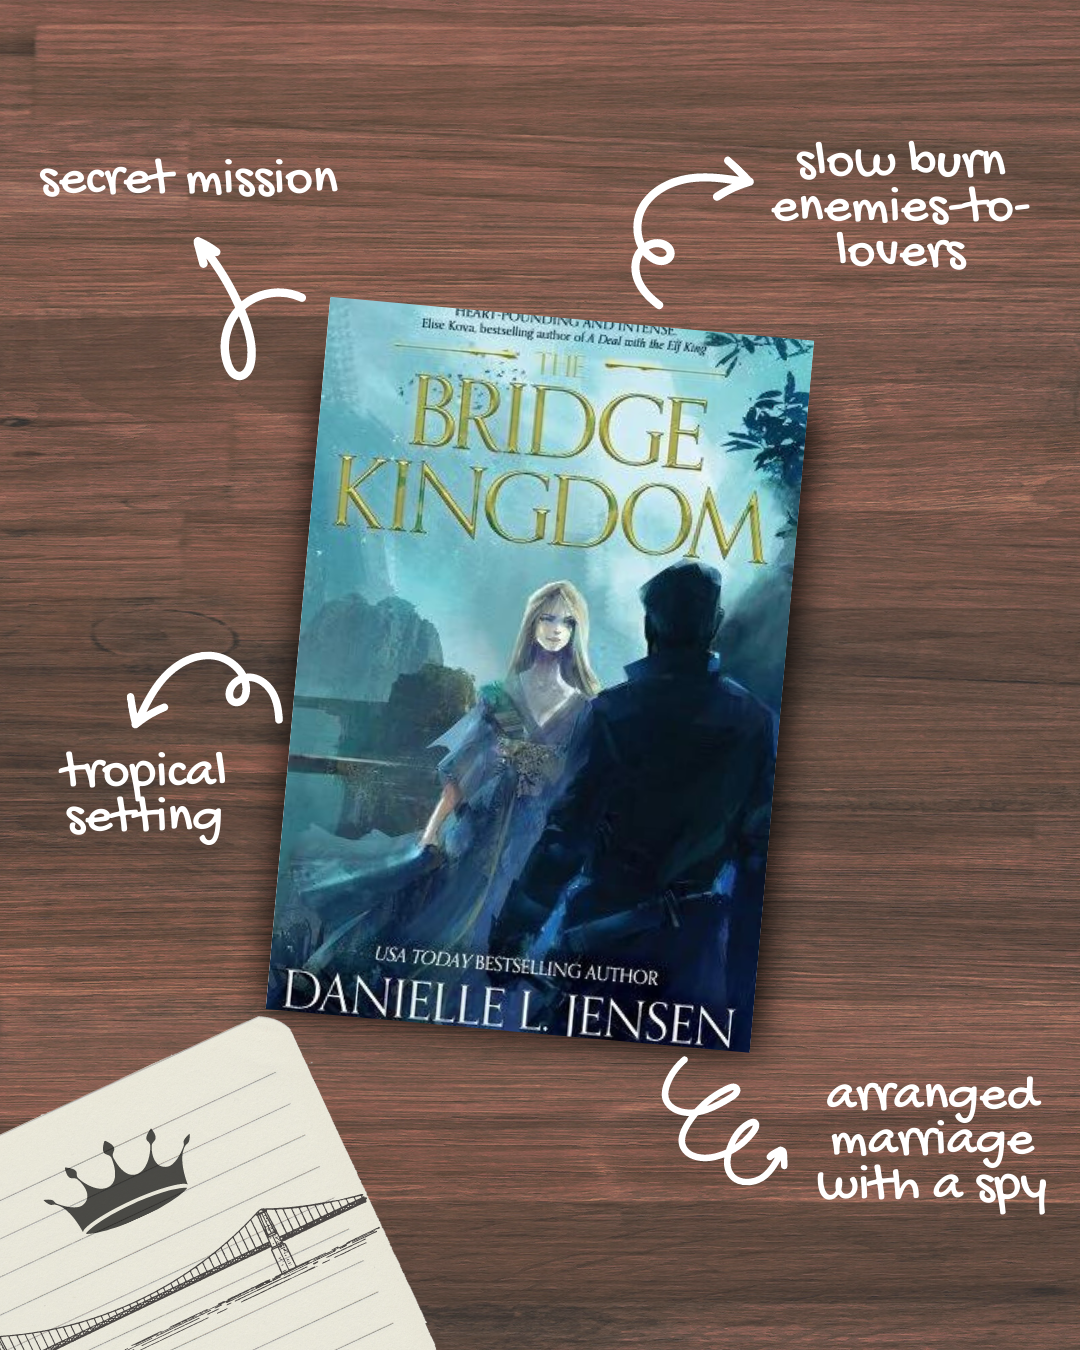 Book Review: The Bridge Kingdom